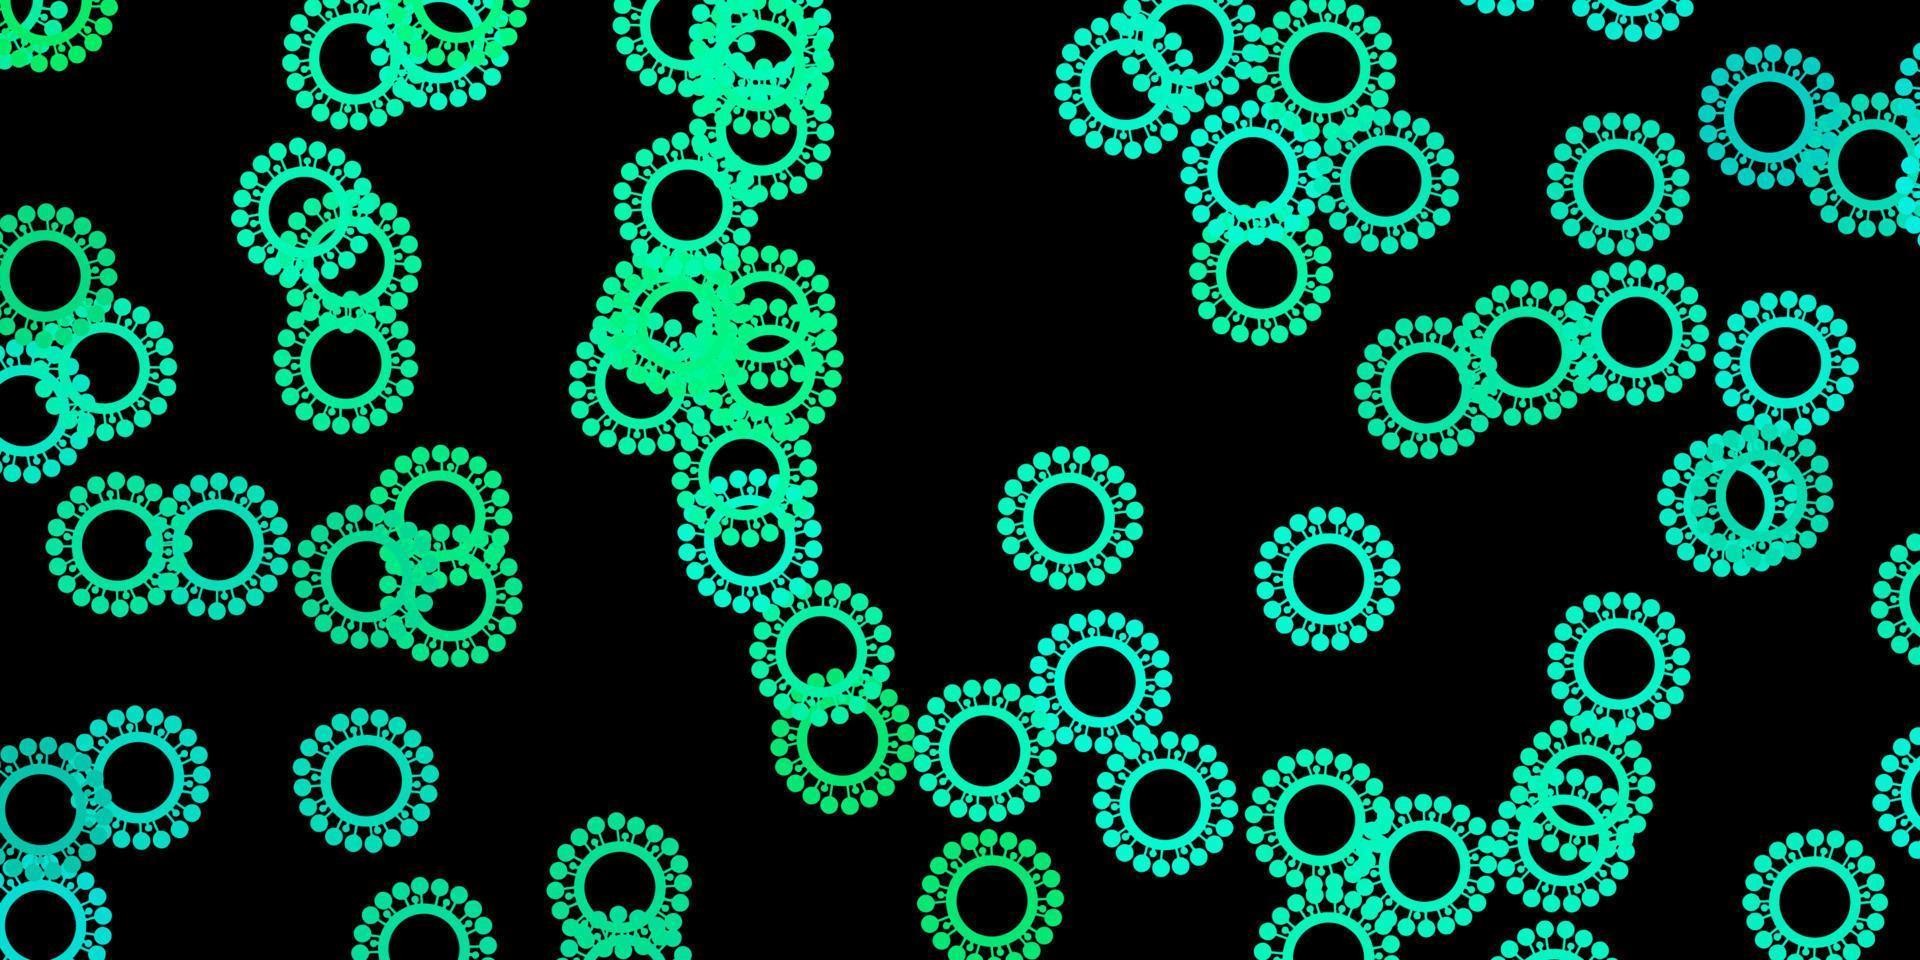 mörkgrönt vektormönster med coronaviruselement. vektor